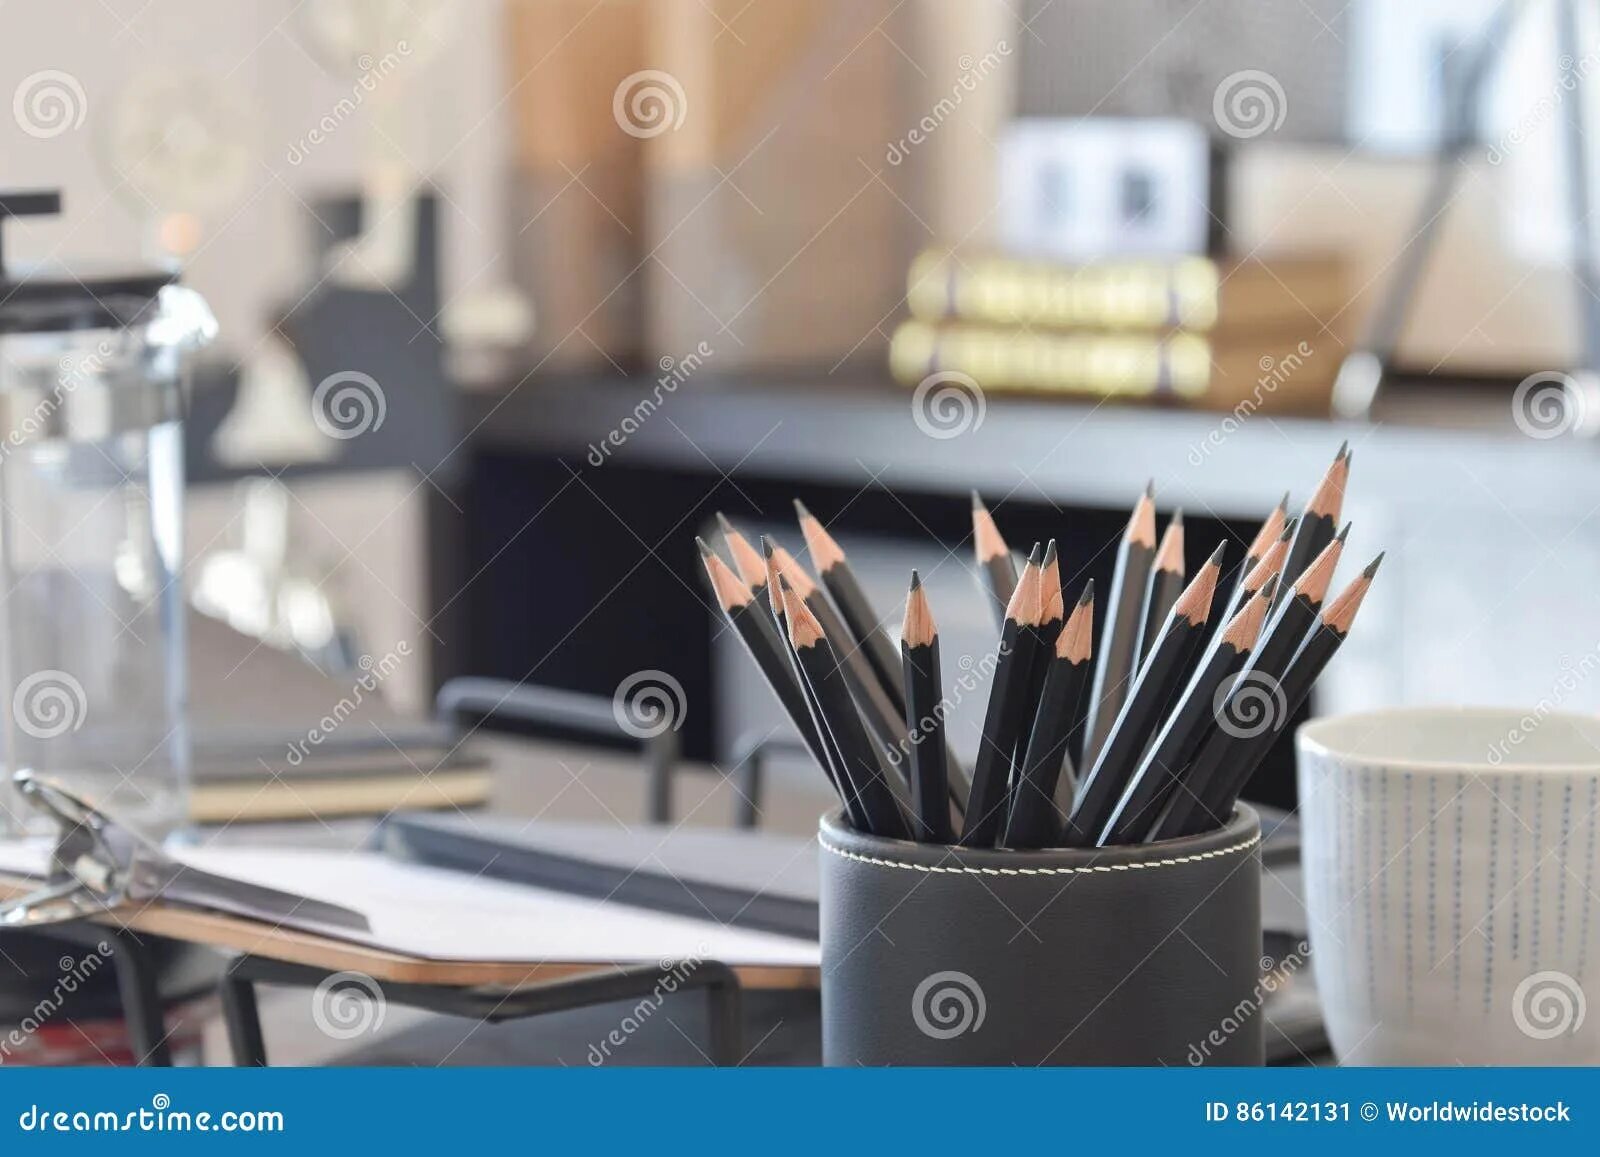 Черные карандаши на столе. Карандаши на столе фото. Черные карандаши у руководителя. Черный карандаш на столе фото. Pencil work